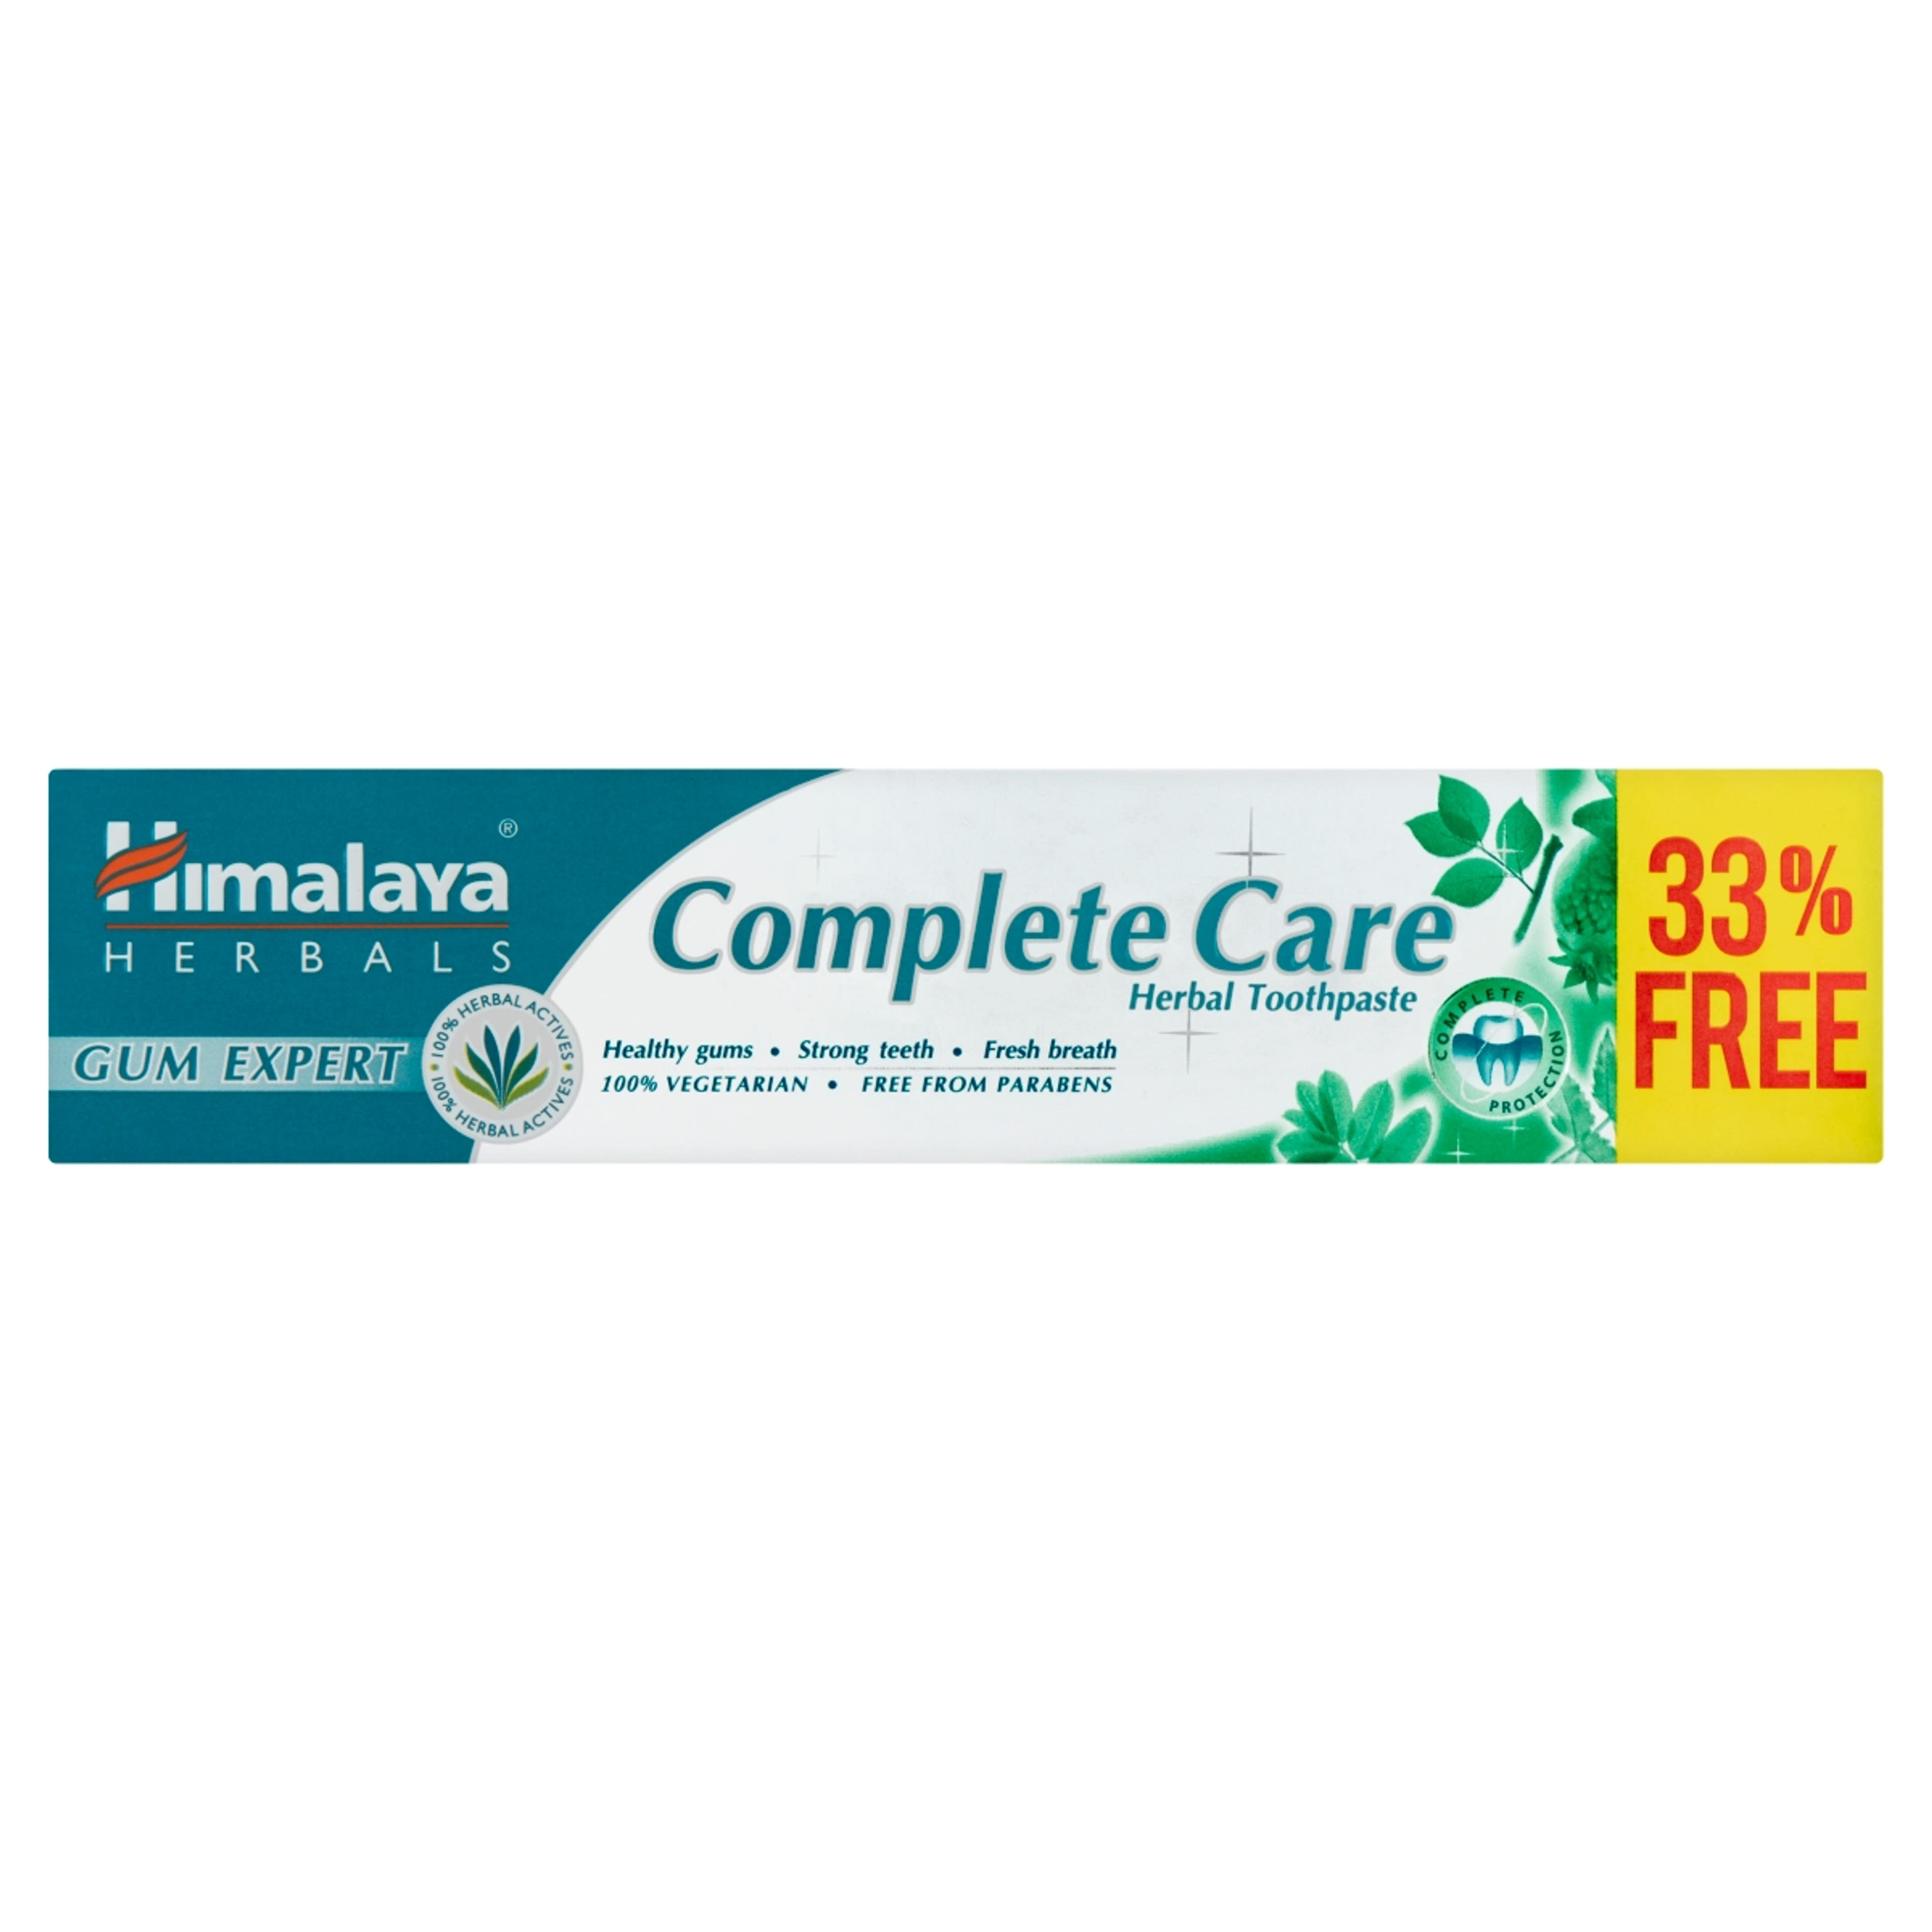 Himalaya Herbals Complete Care fogkrém - 100 ml-1